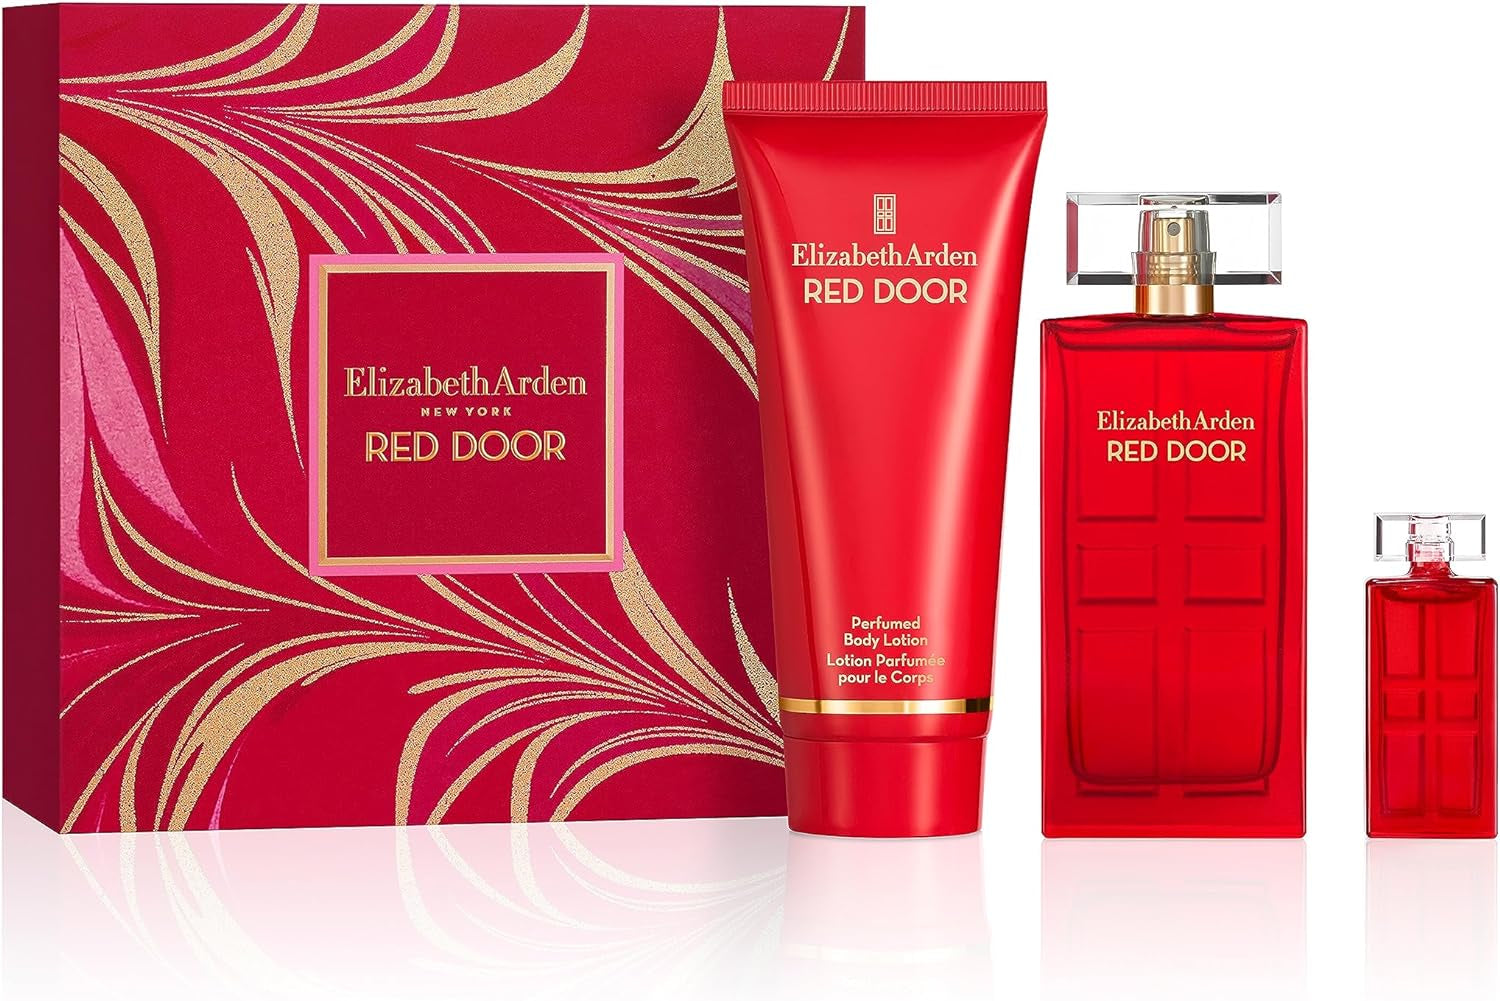 RED DOOR Eau De Toilette, 50Ml, 3-Piece Gift Set, Fragrance Gifting for Women